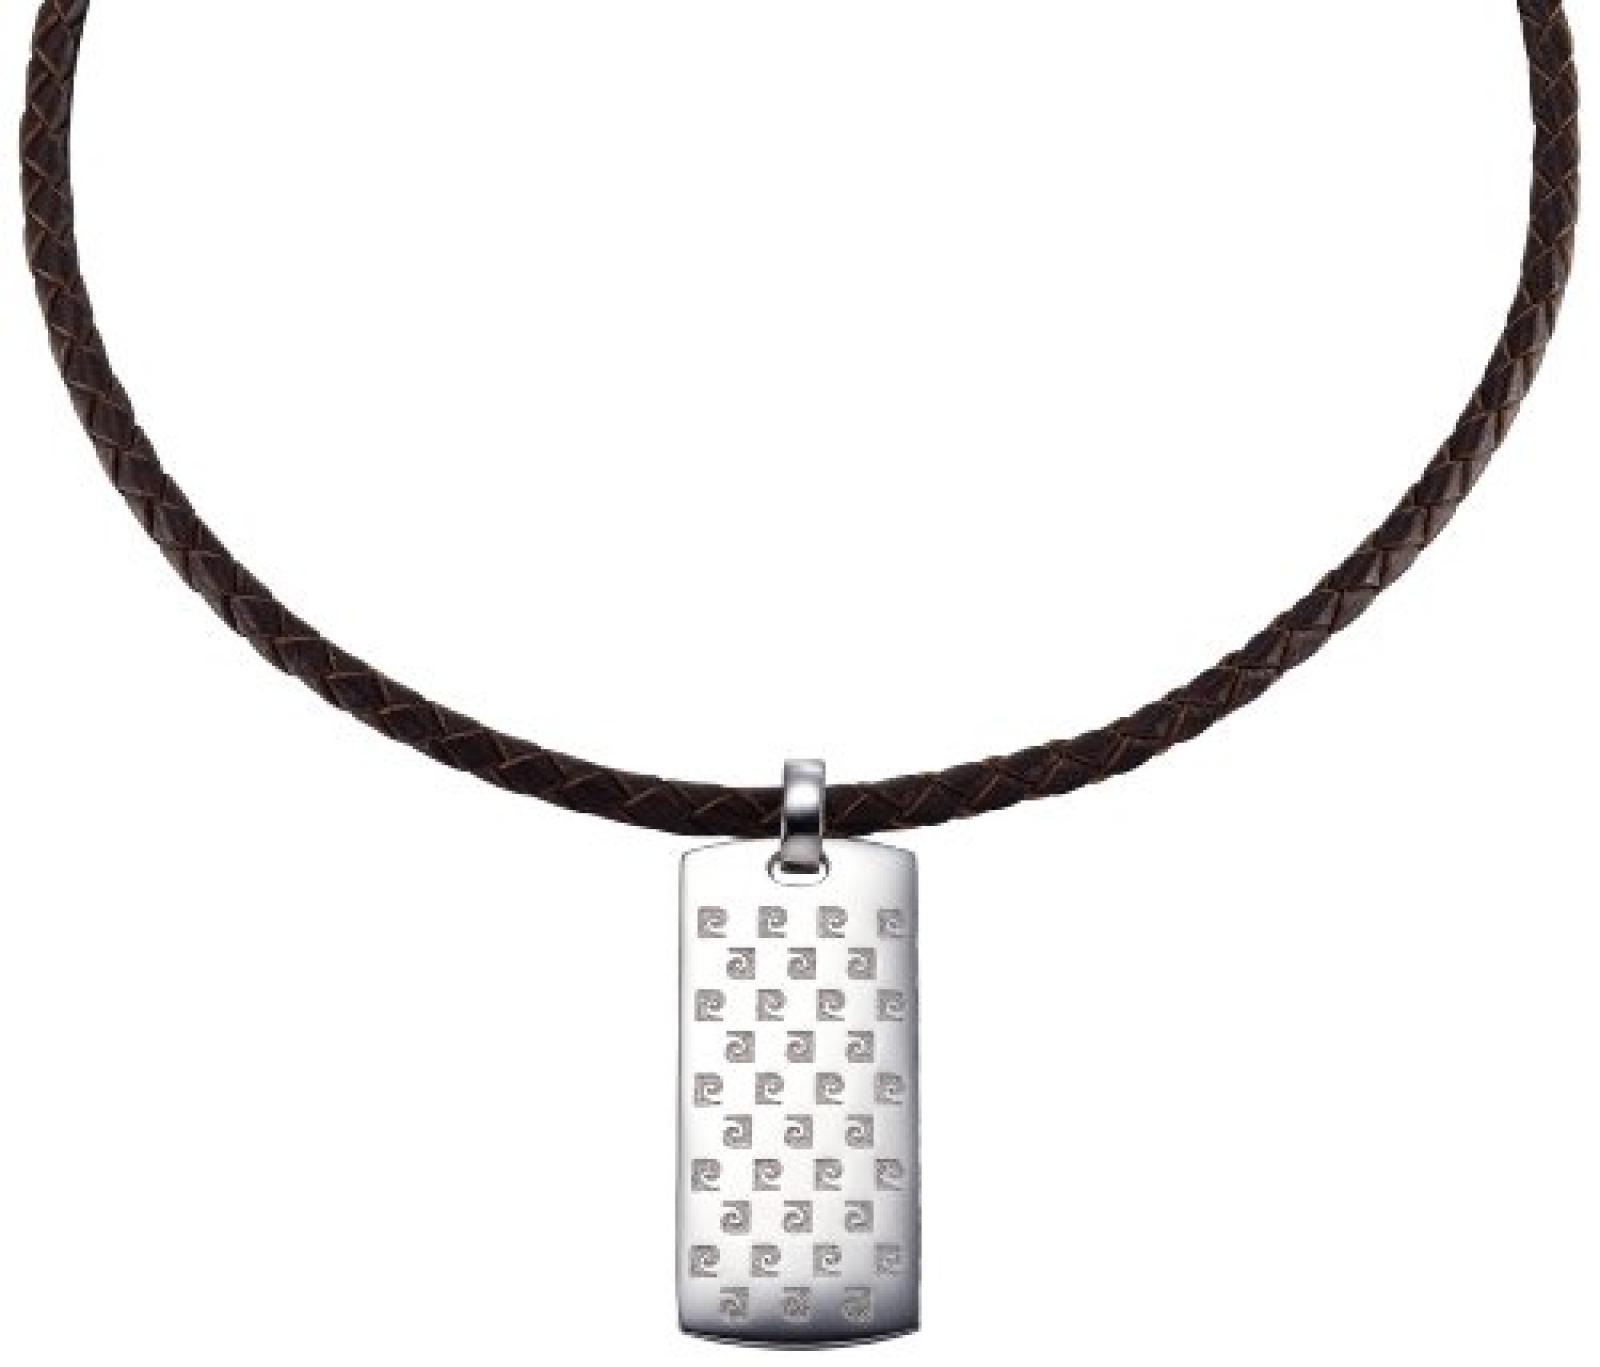 Pierre Cardin Unisex Halskette 925 Sterling Silber rhodiniert Leder Influence 50 cm PCNL90397B500 